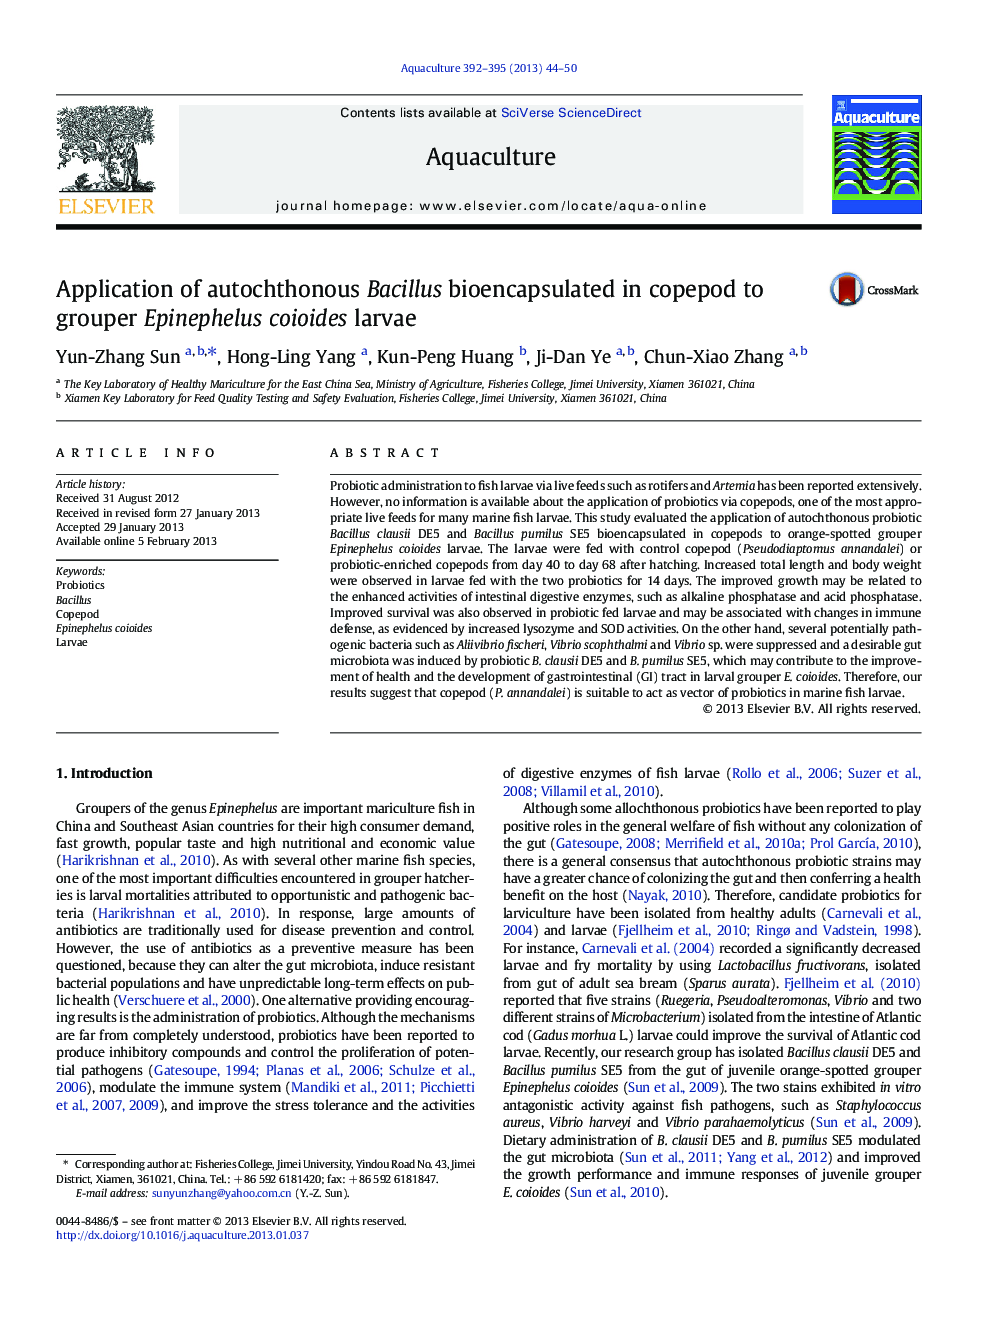 Application of autochthonous Bacillus bioencapsulated in copepod to grouper Epinephelus coioides larvae